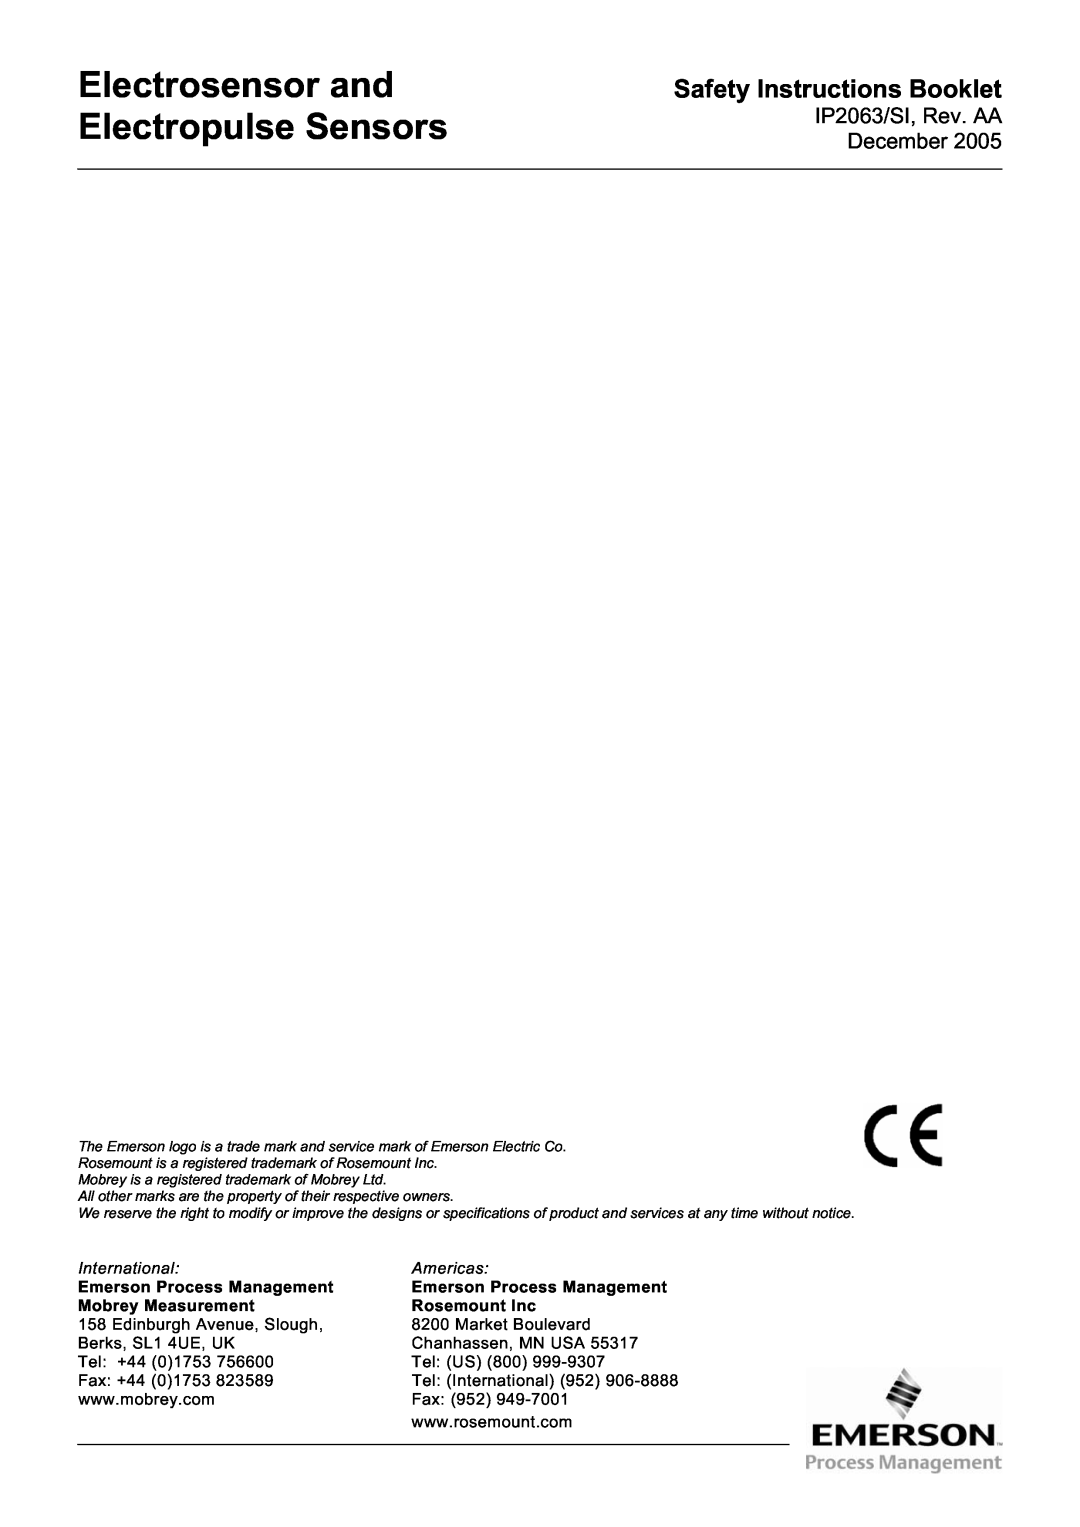 Emerson Electrosensor and Electropulse Sensors, Safety Instructions Booklet, IP2063/SI, Rev. AA December, Rosemount Inc 